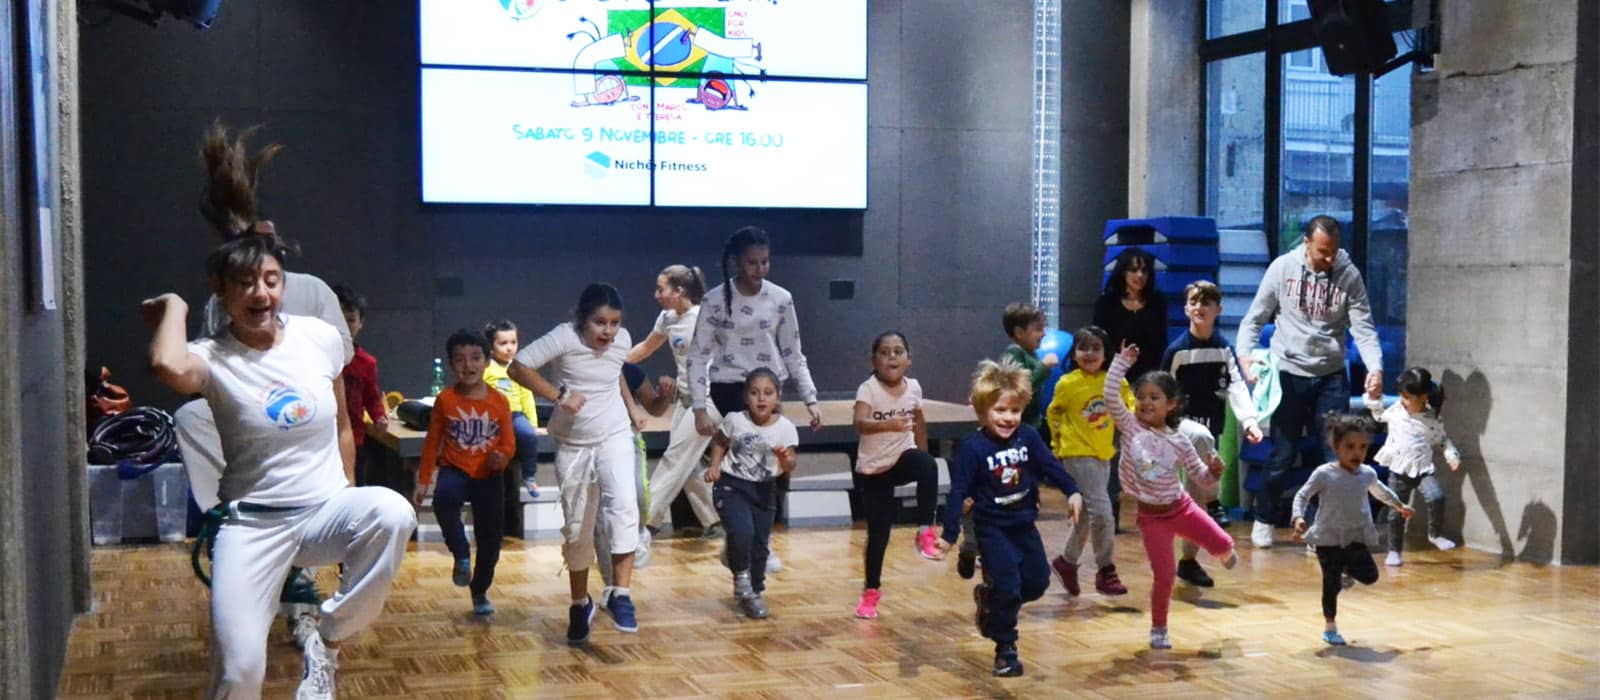 Joga Capoeira, la Capoeira per i bambini